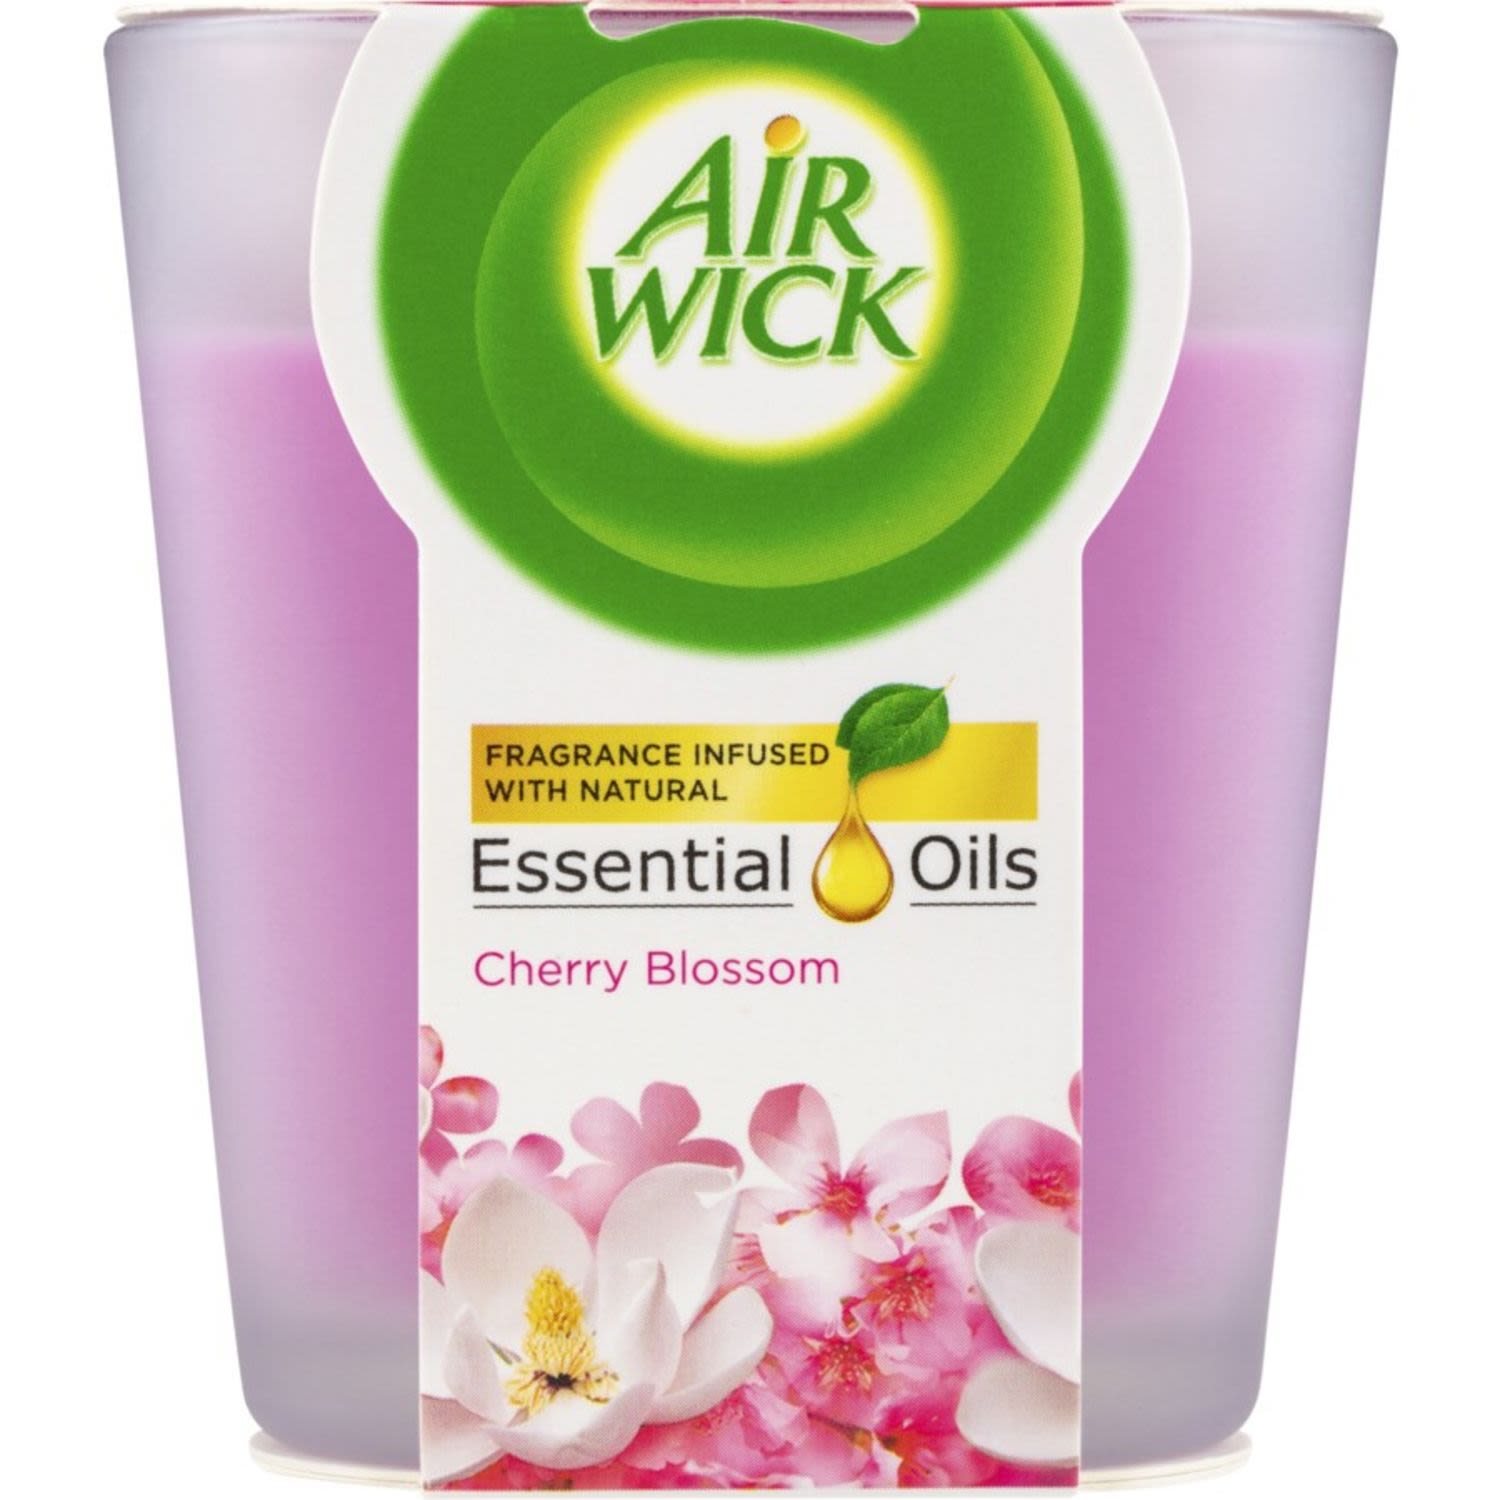 Air Wick Essential Oil Candle Cherry Blossom, 105 Gram